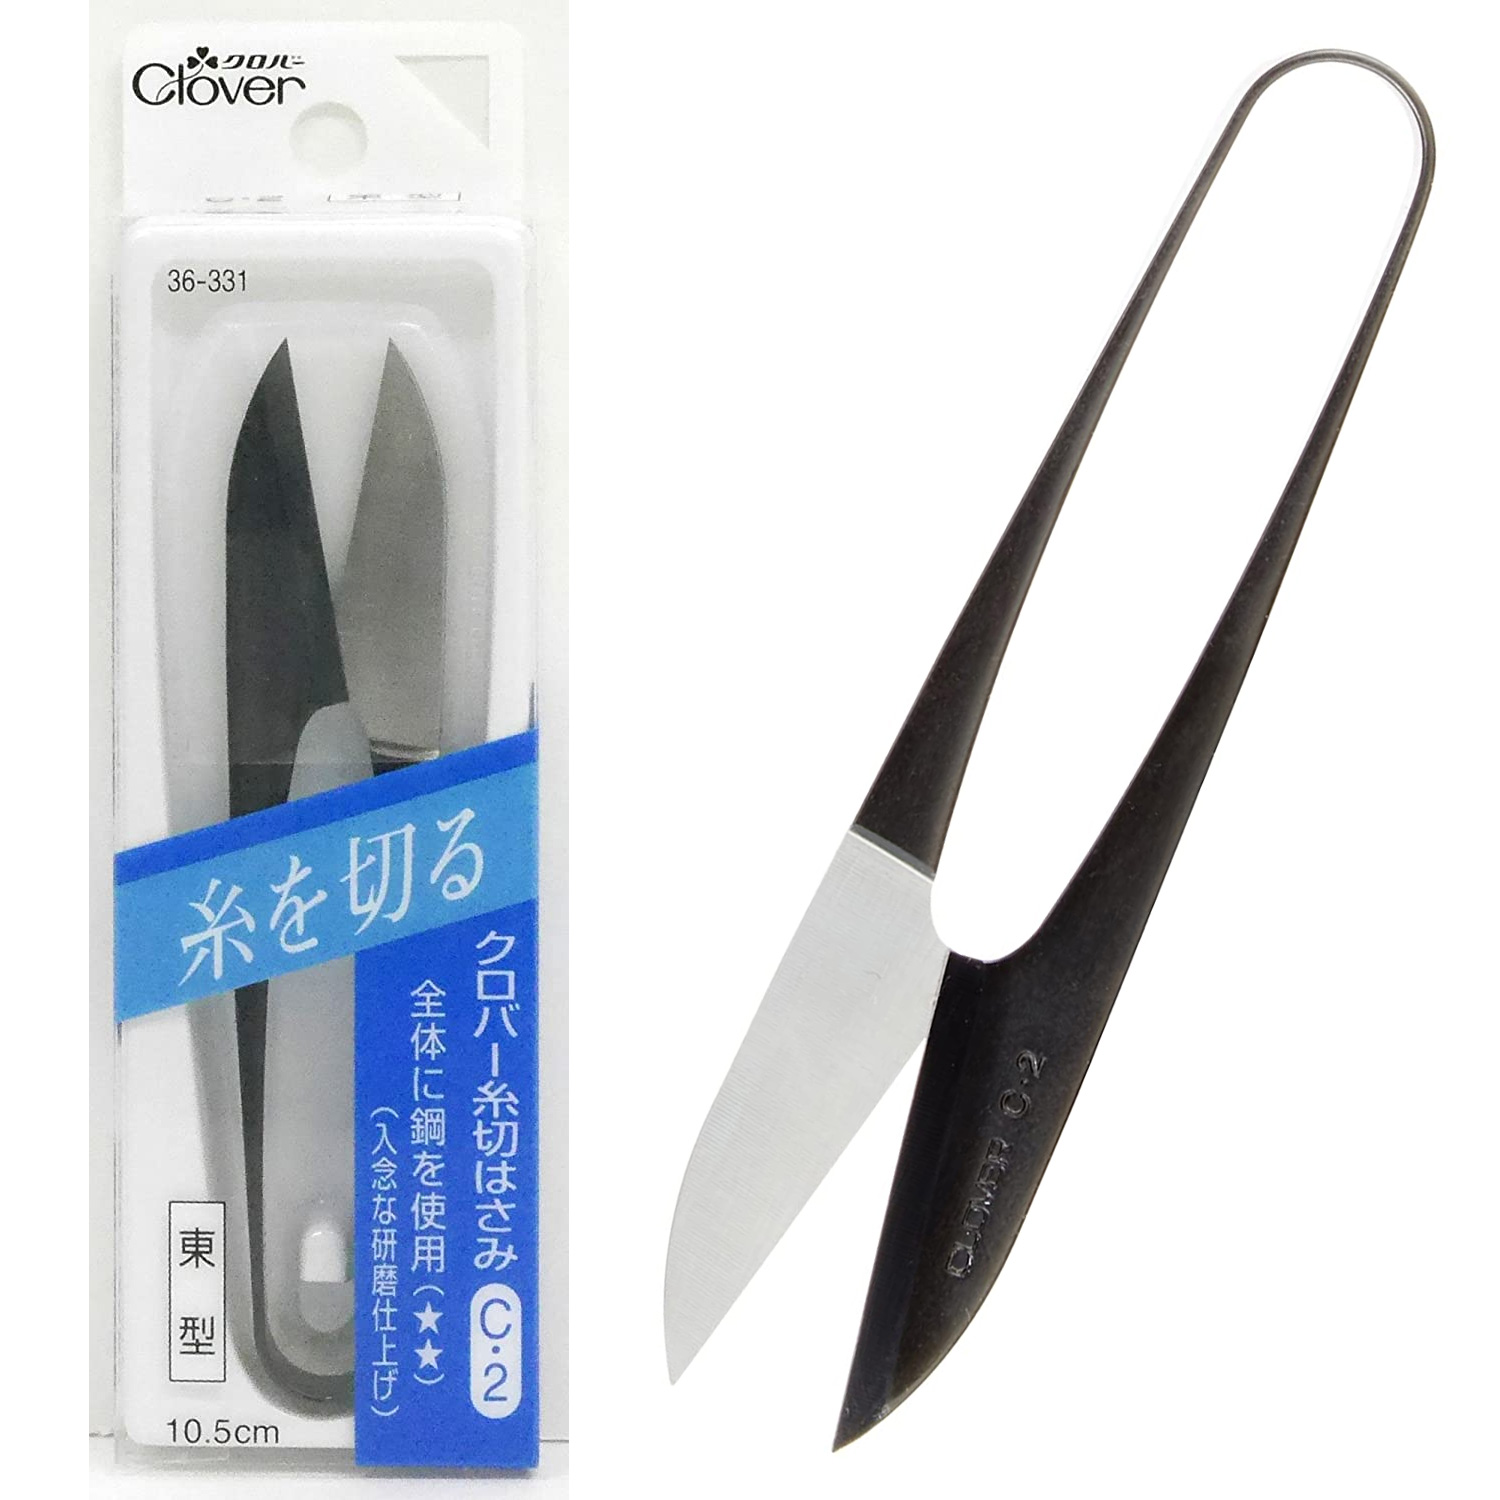 CL36-331 Clover Thread Scissors C-2 Eastern Type (pcs)